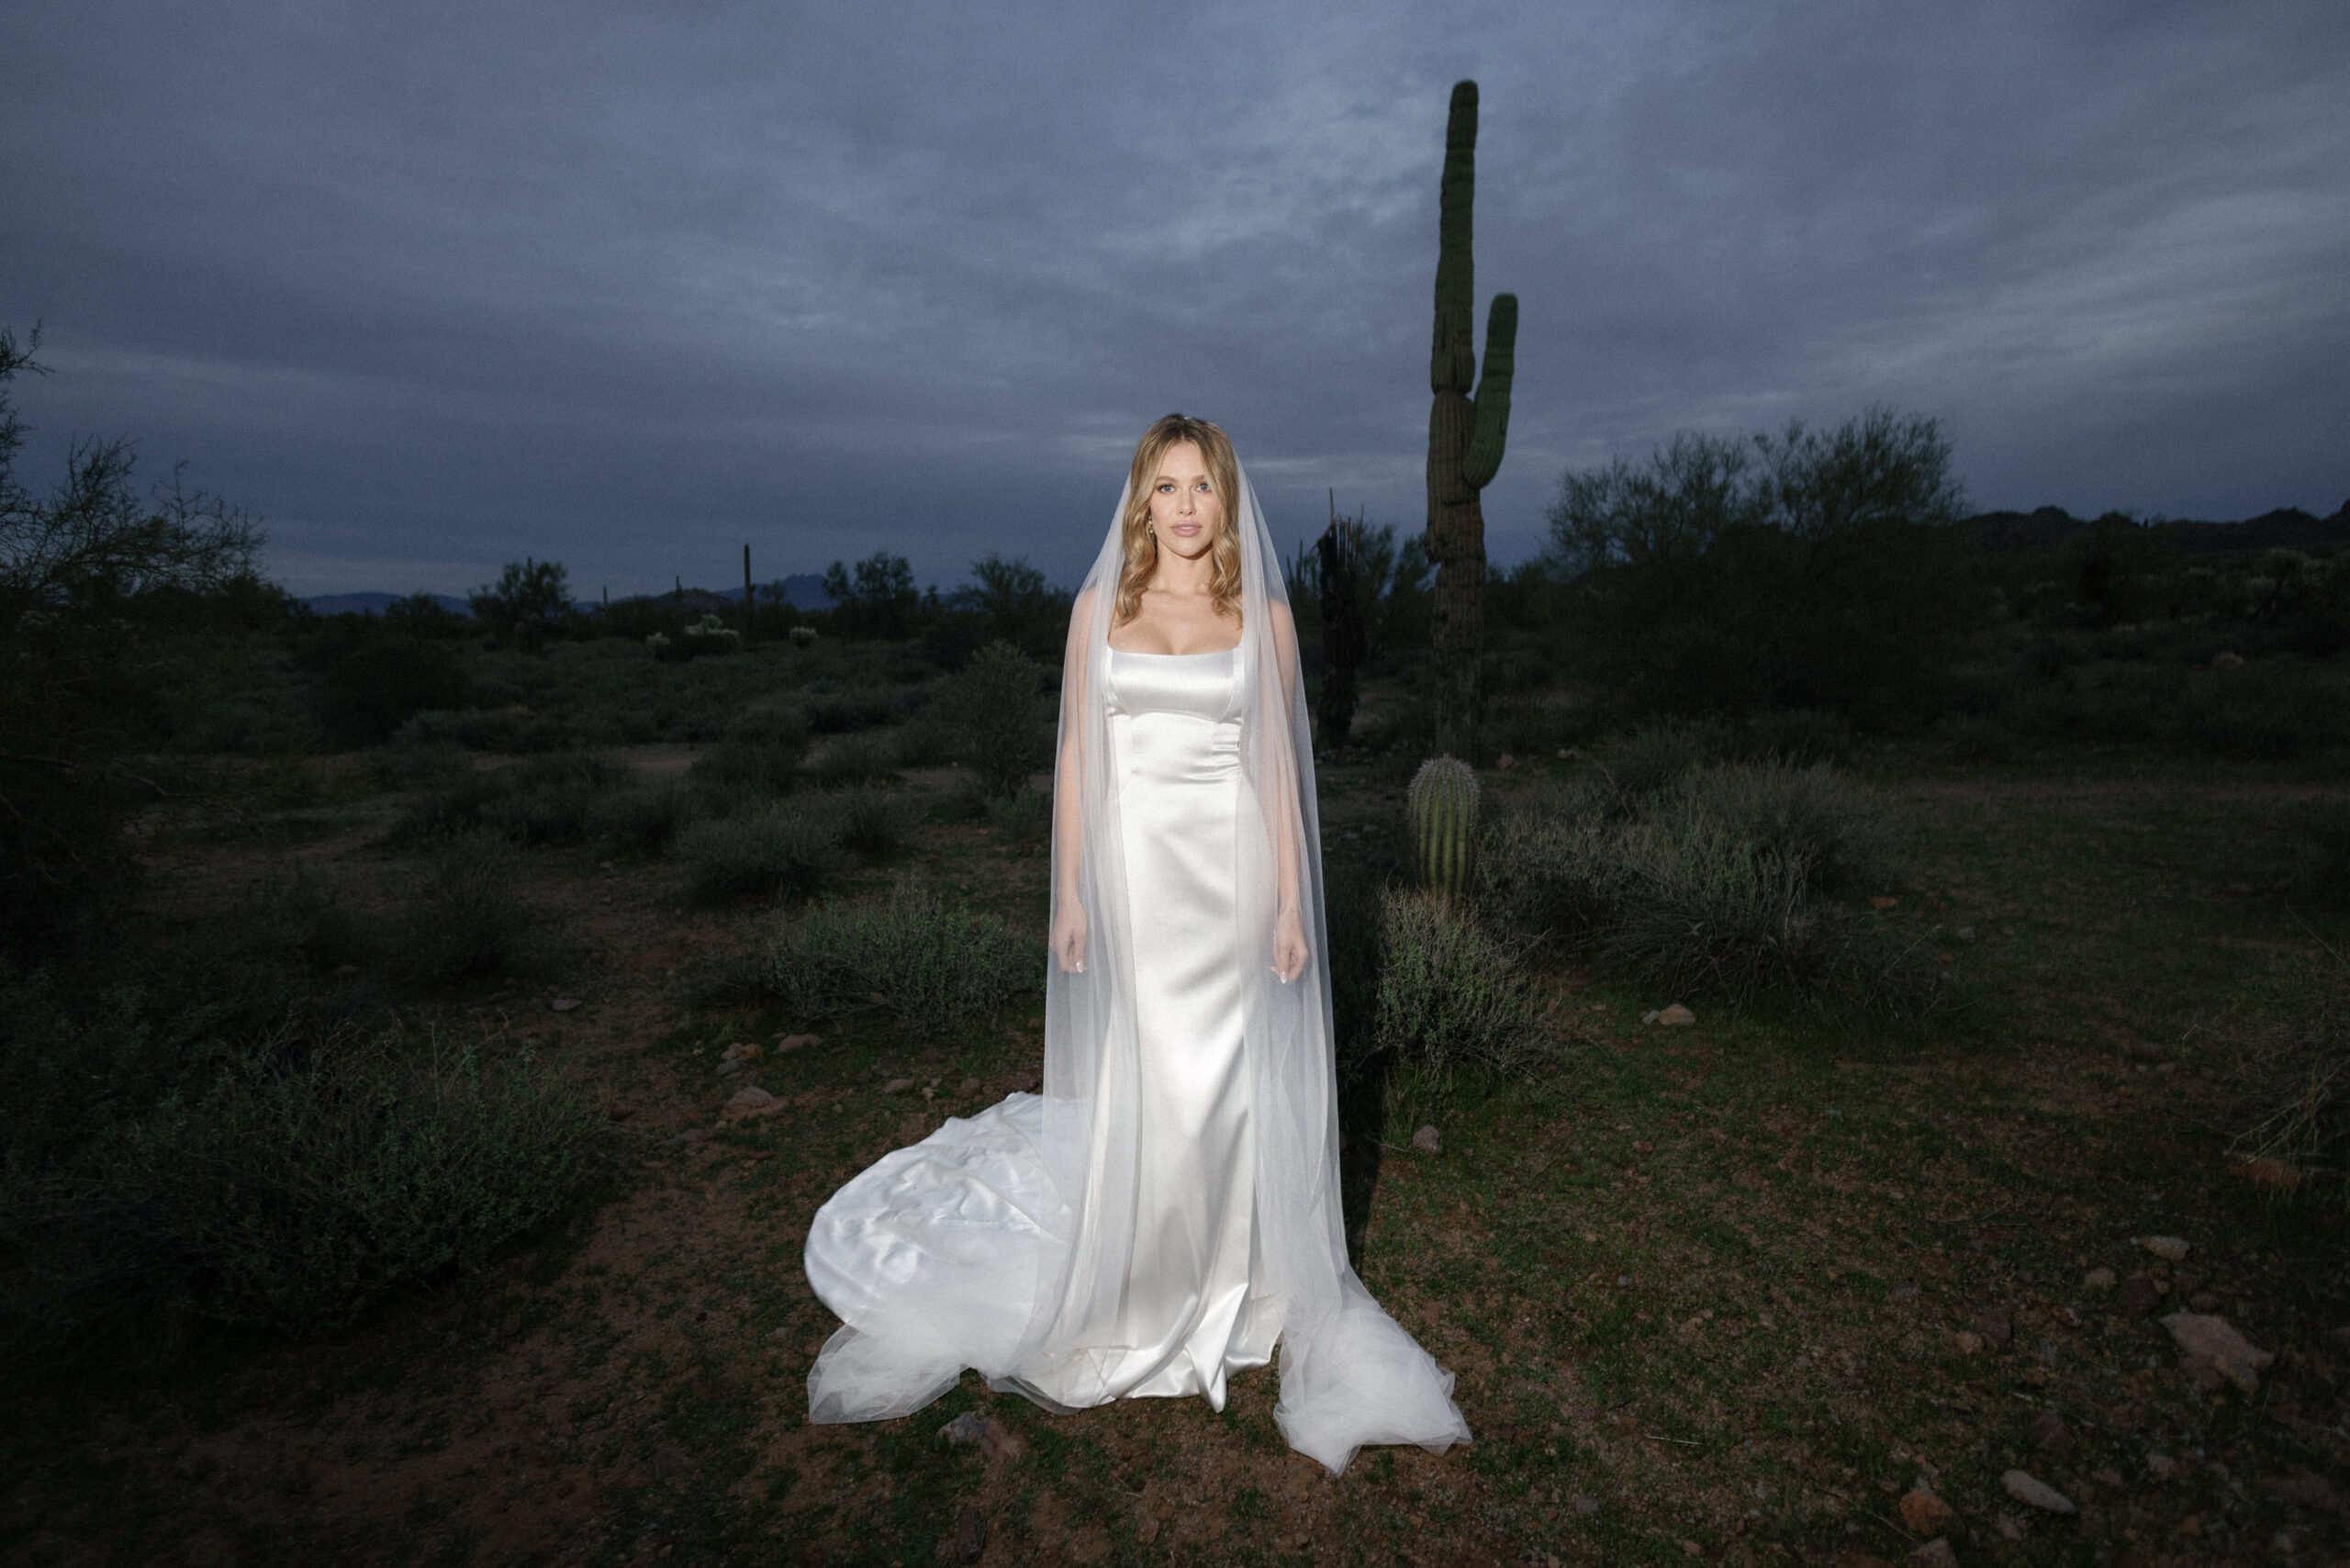 A desert bride standing in front of cactus wear under wedding dress